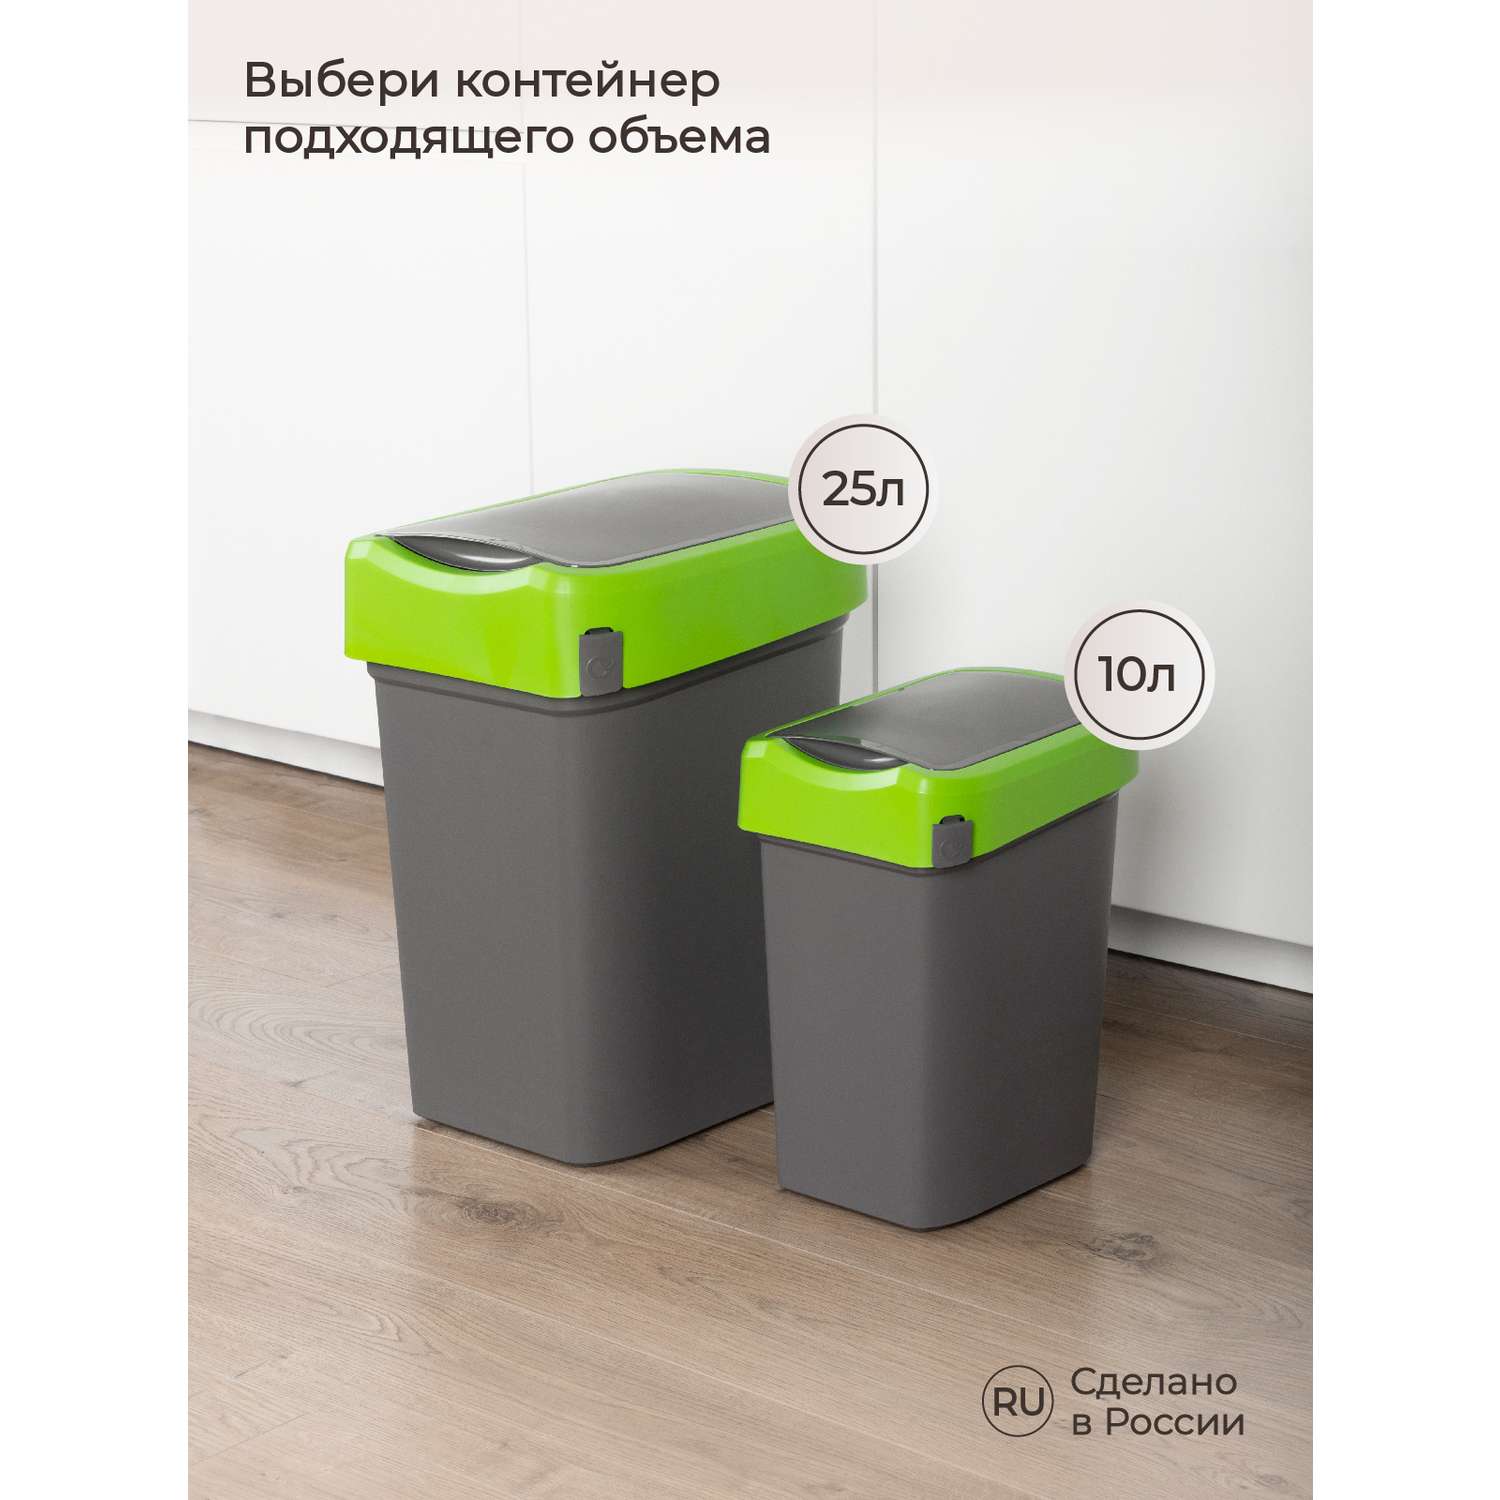 Контейнер Econova для мусора Smart Bin 25л зеленый - фото 8